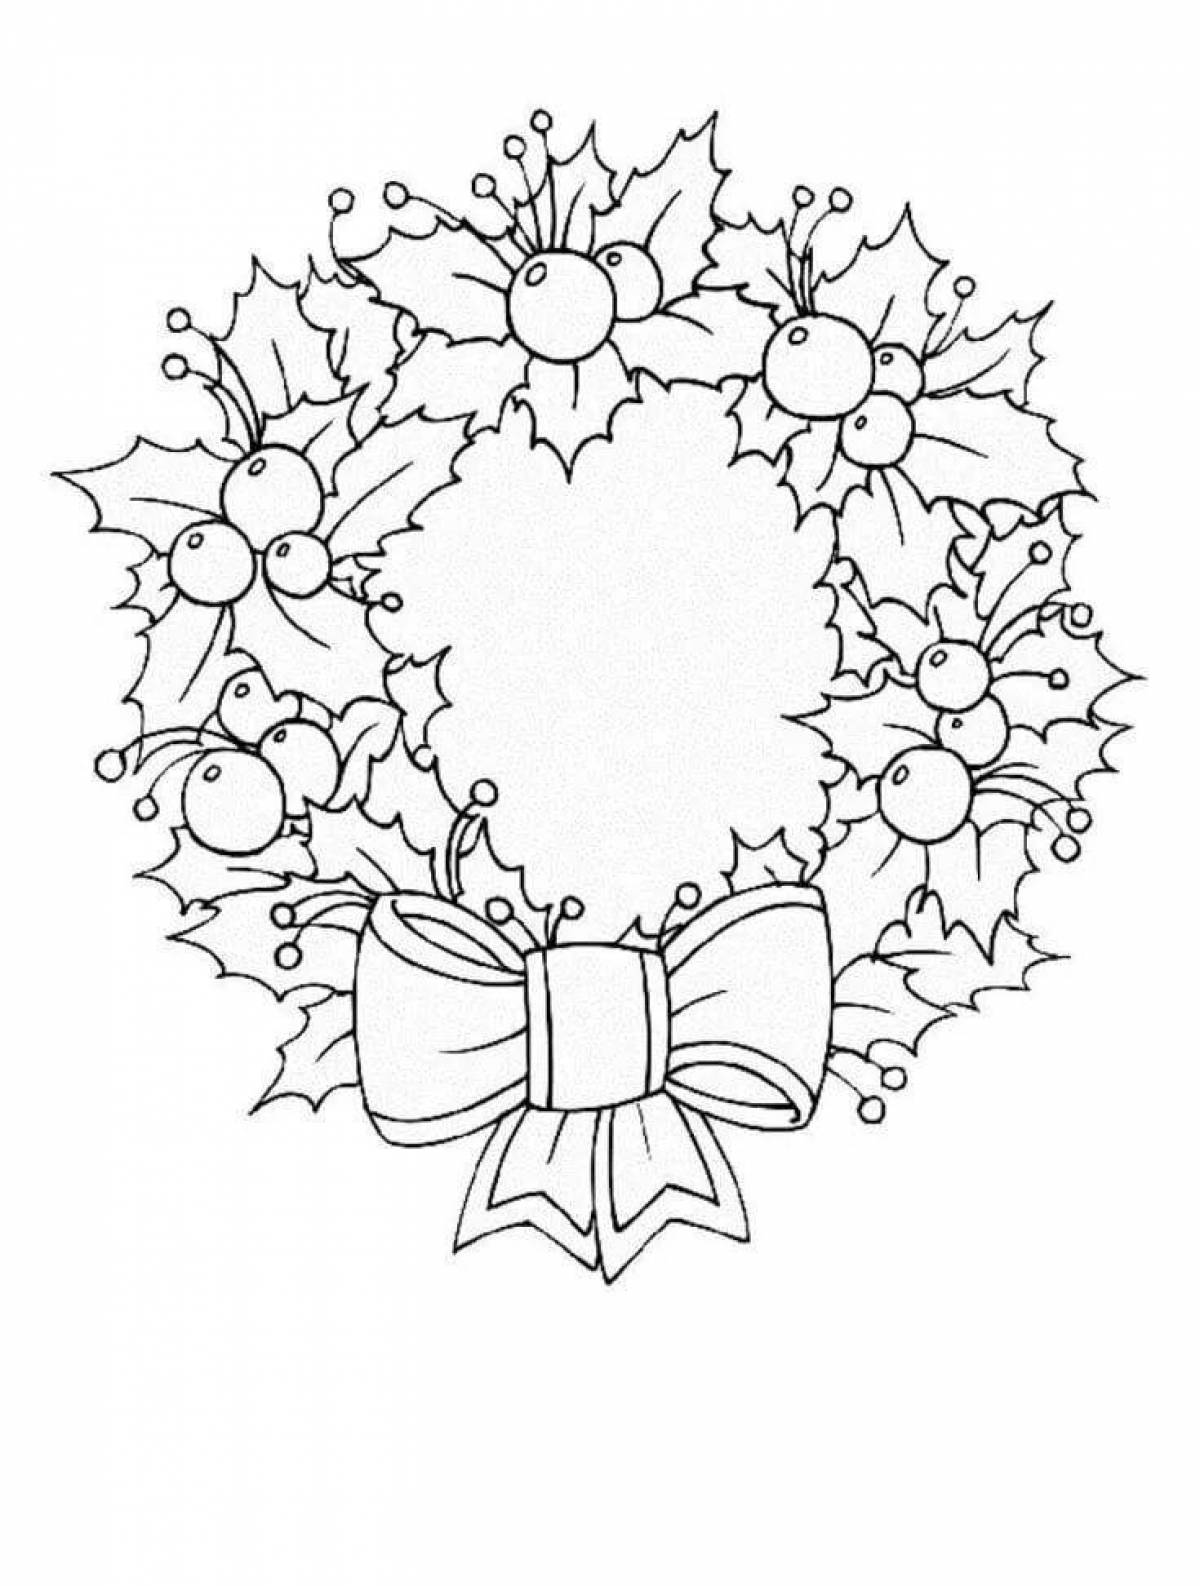 Coloring page elegant wreath